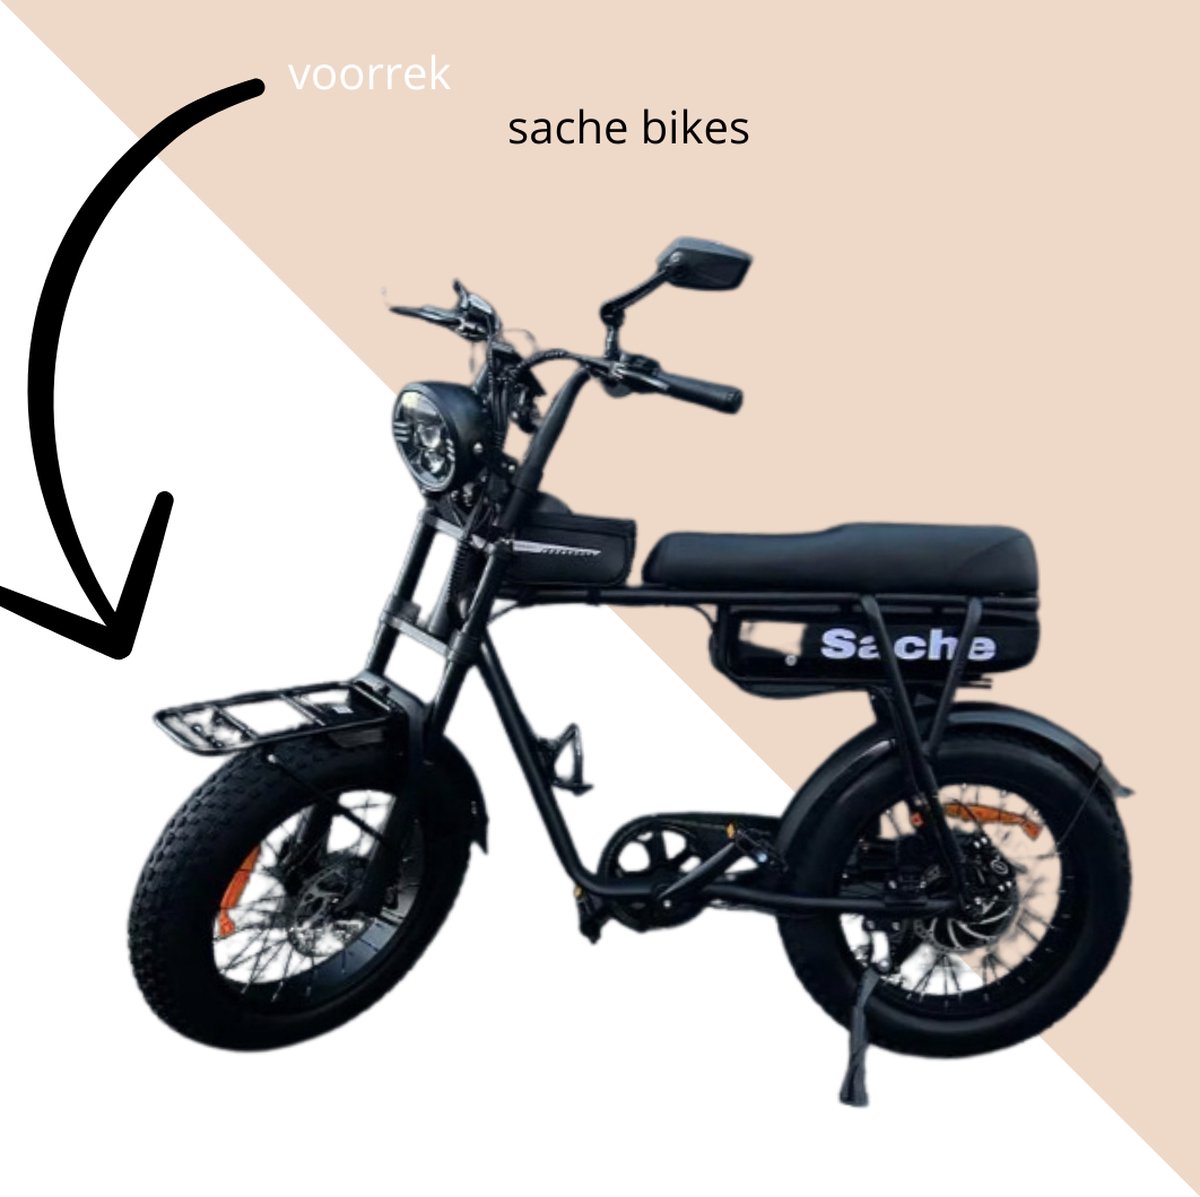 Fatbike Voorrek - voordrager - EB2 - EB3 - EB8 - V8 - H9 - V20 PAST OP ALLE FATBIKE MERKEN - ZEER STEVIG - pre-stretch | Sache Bikes - Sache Bikes